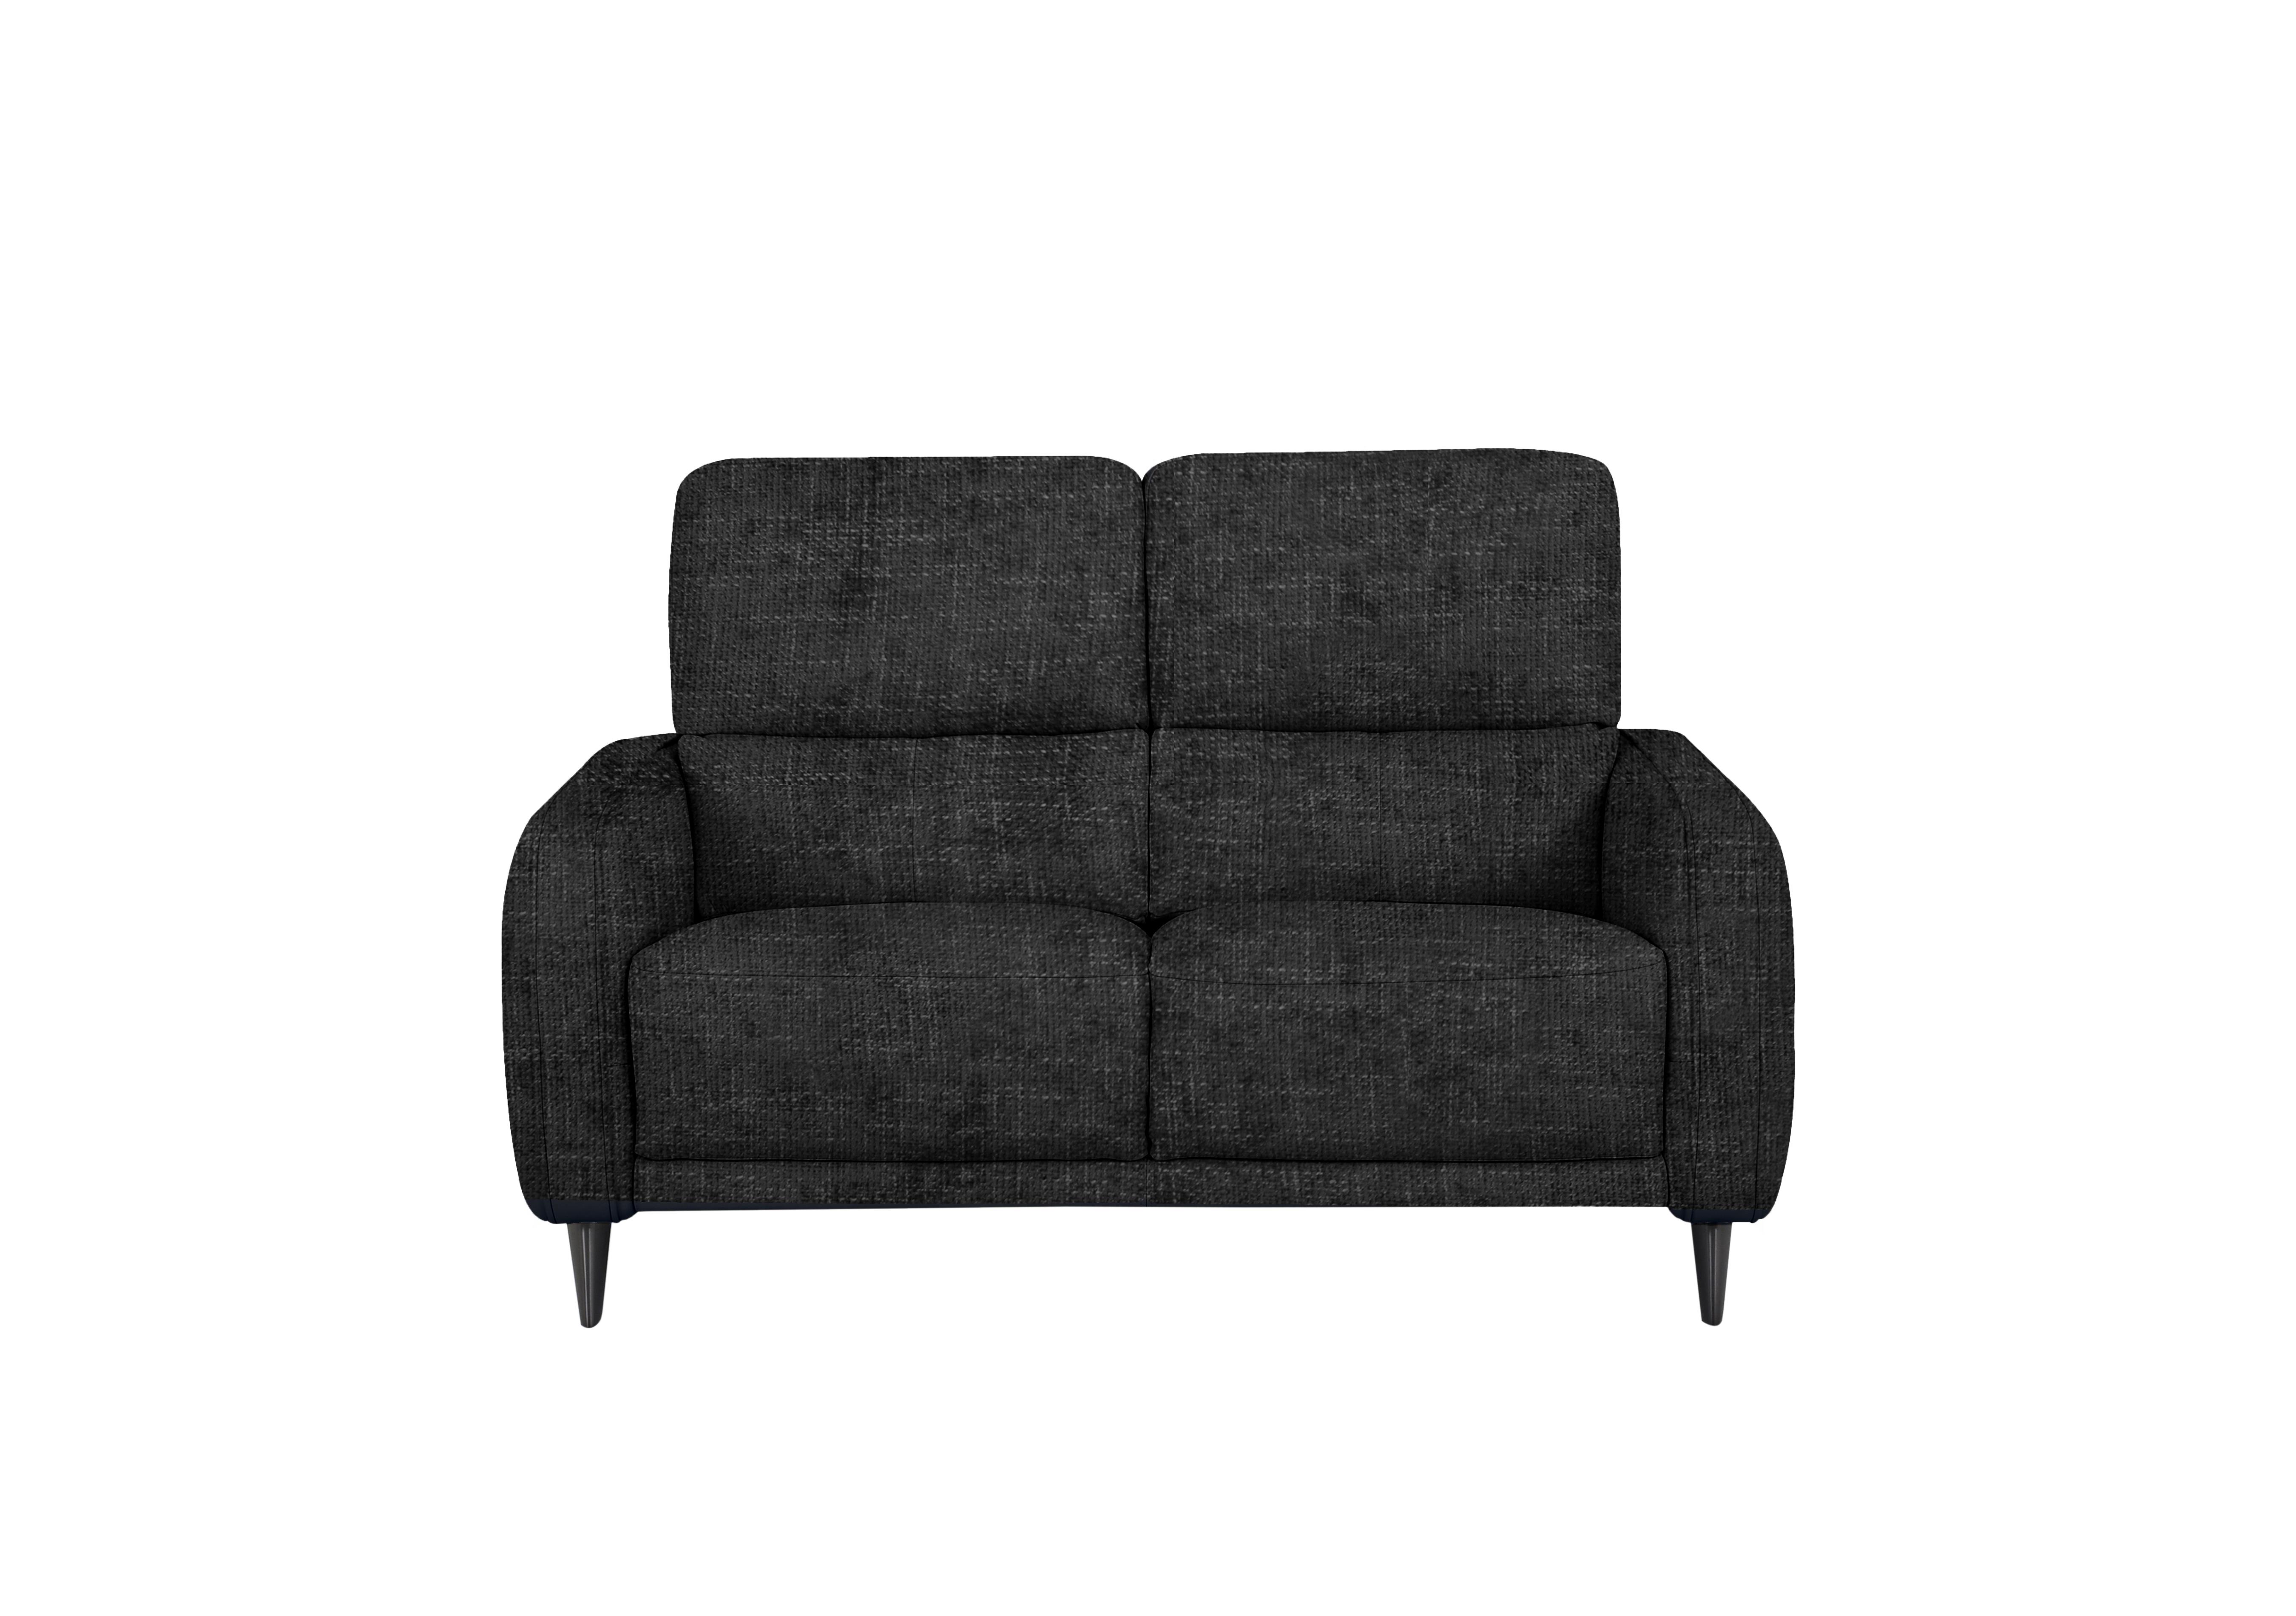 Logan 2 Seater Fabric Sofa in Fab-Cac-R463 Black Mica on Furniture Village